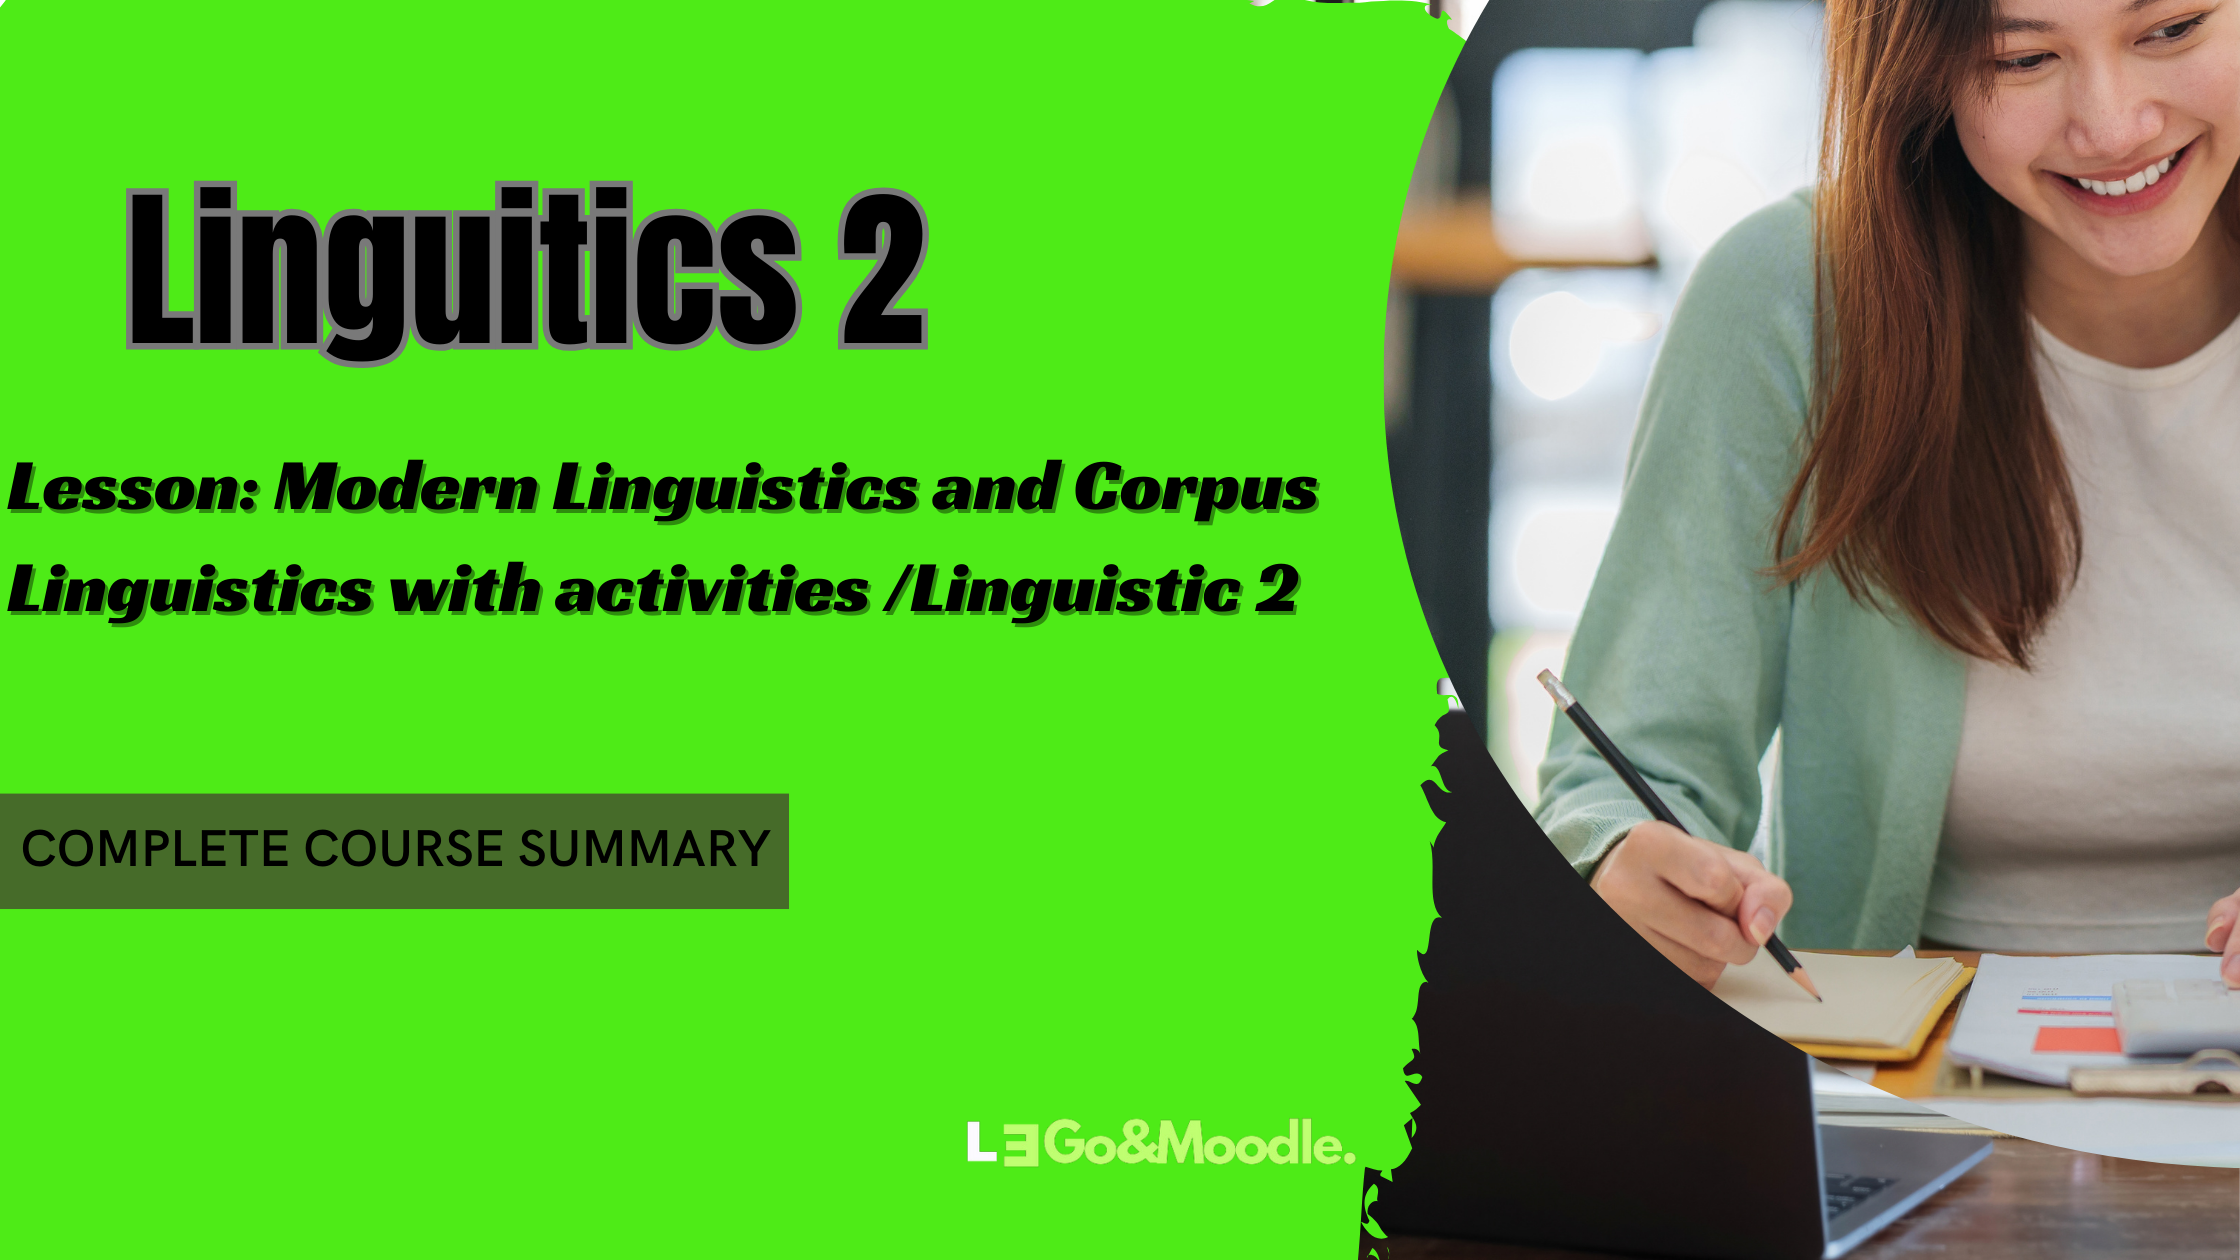 Lesson: Modern Linguistics and Corpus Linguistics with activities/Linguistics 2